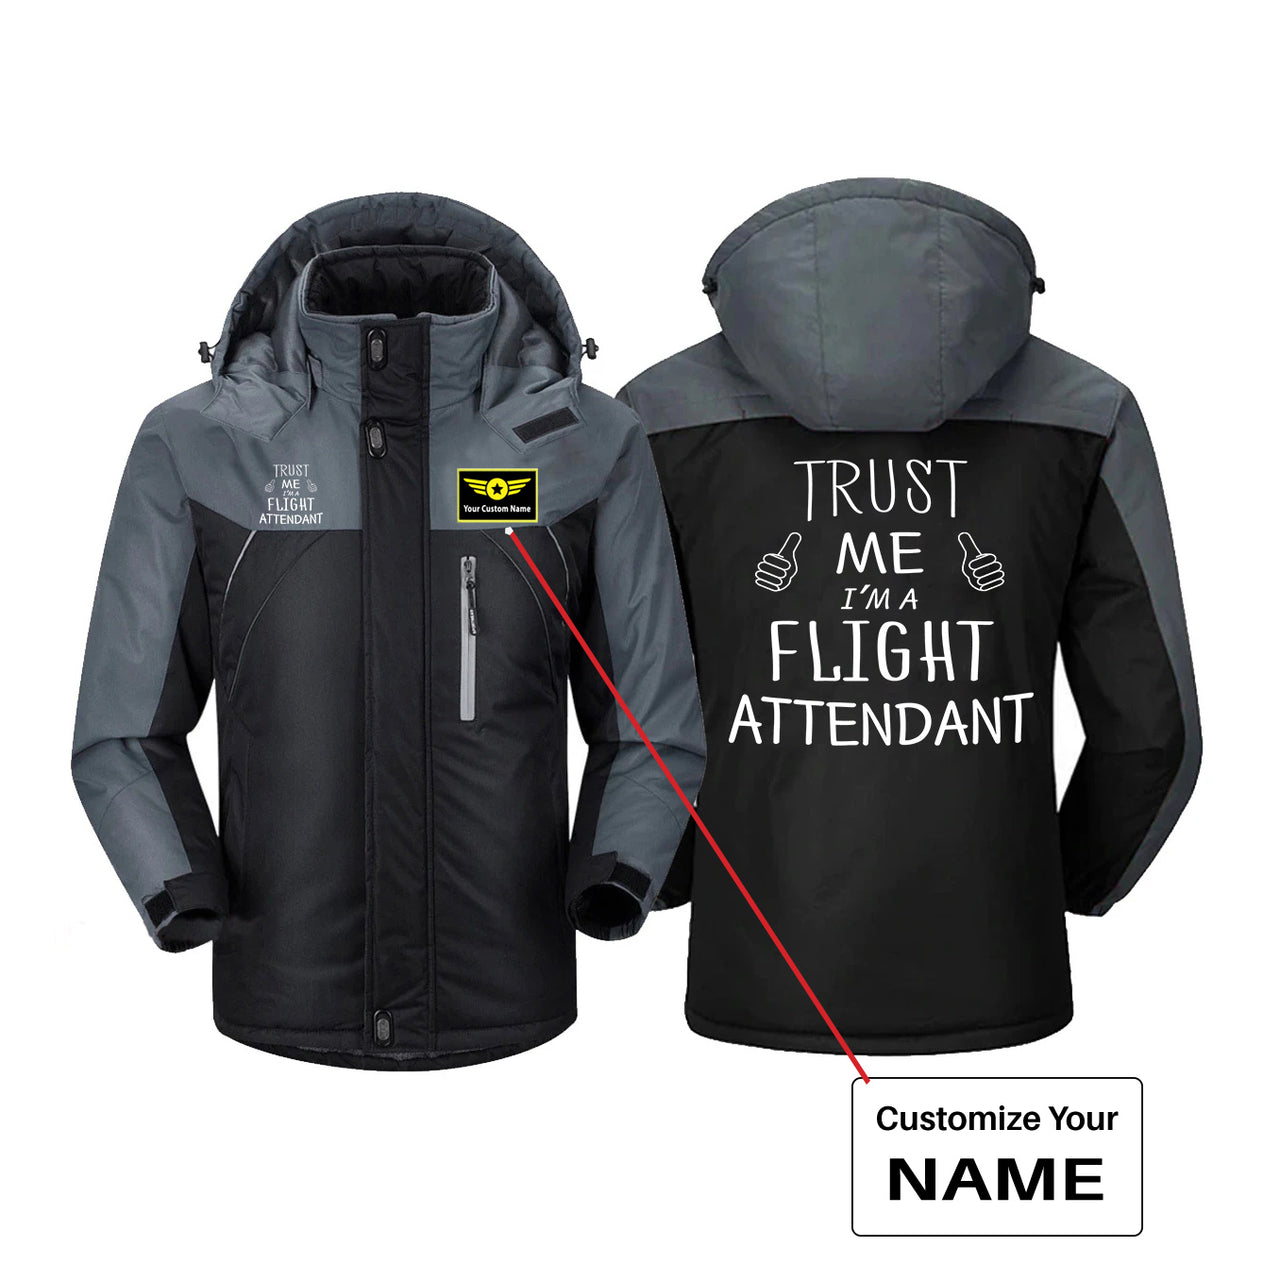 Trust Me I'm a Flight Attendant Designed Thick Winter Jackets